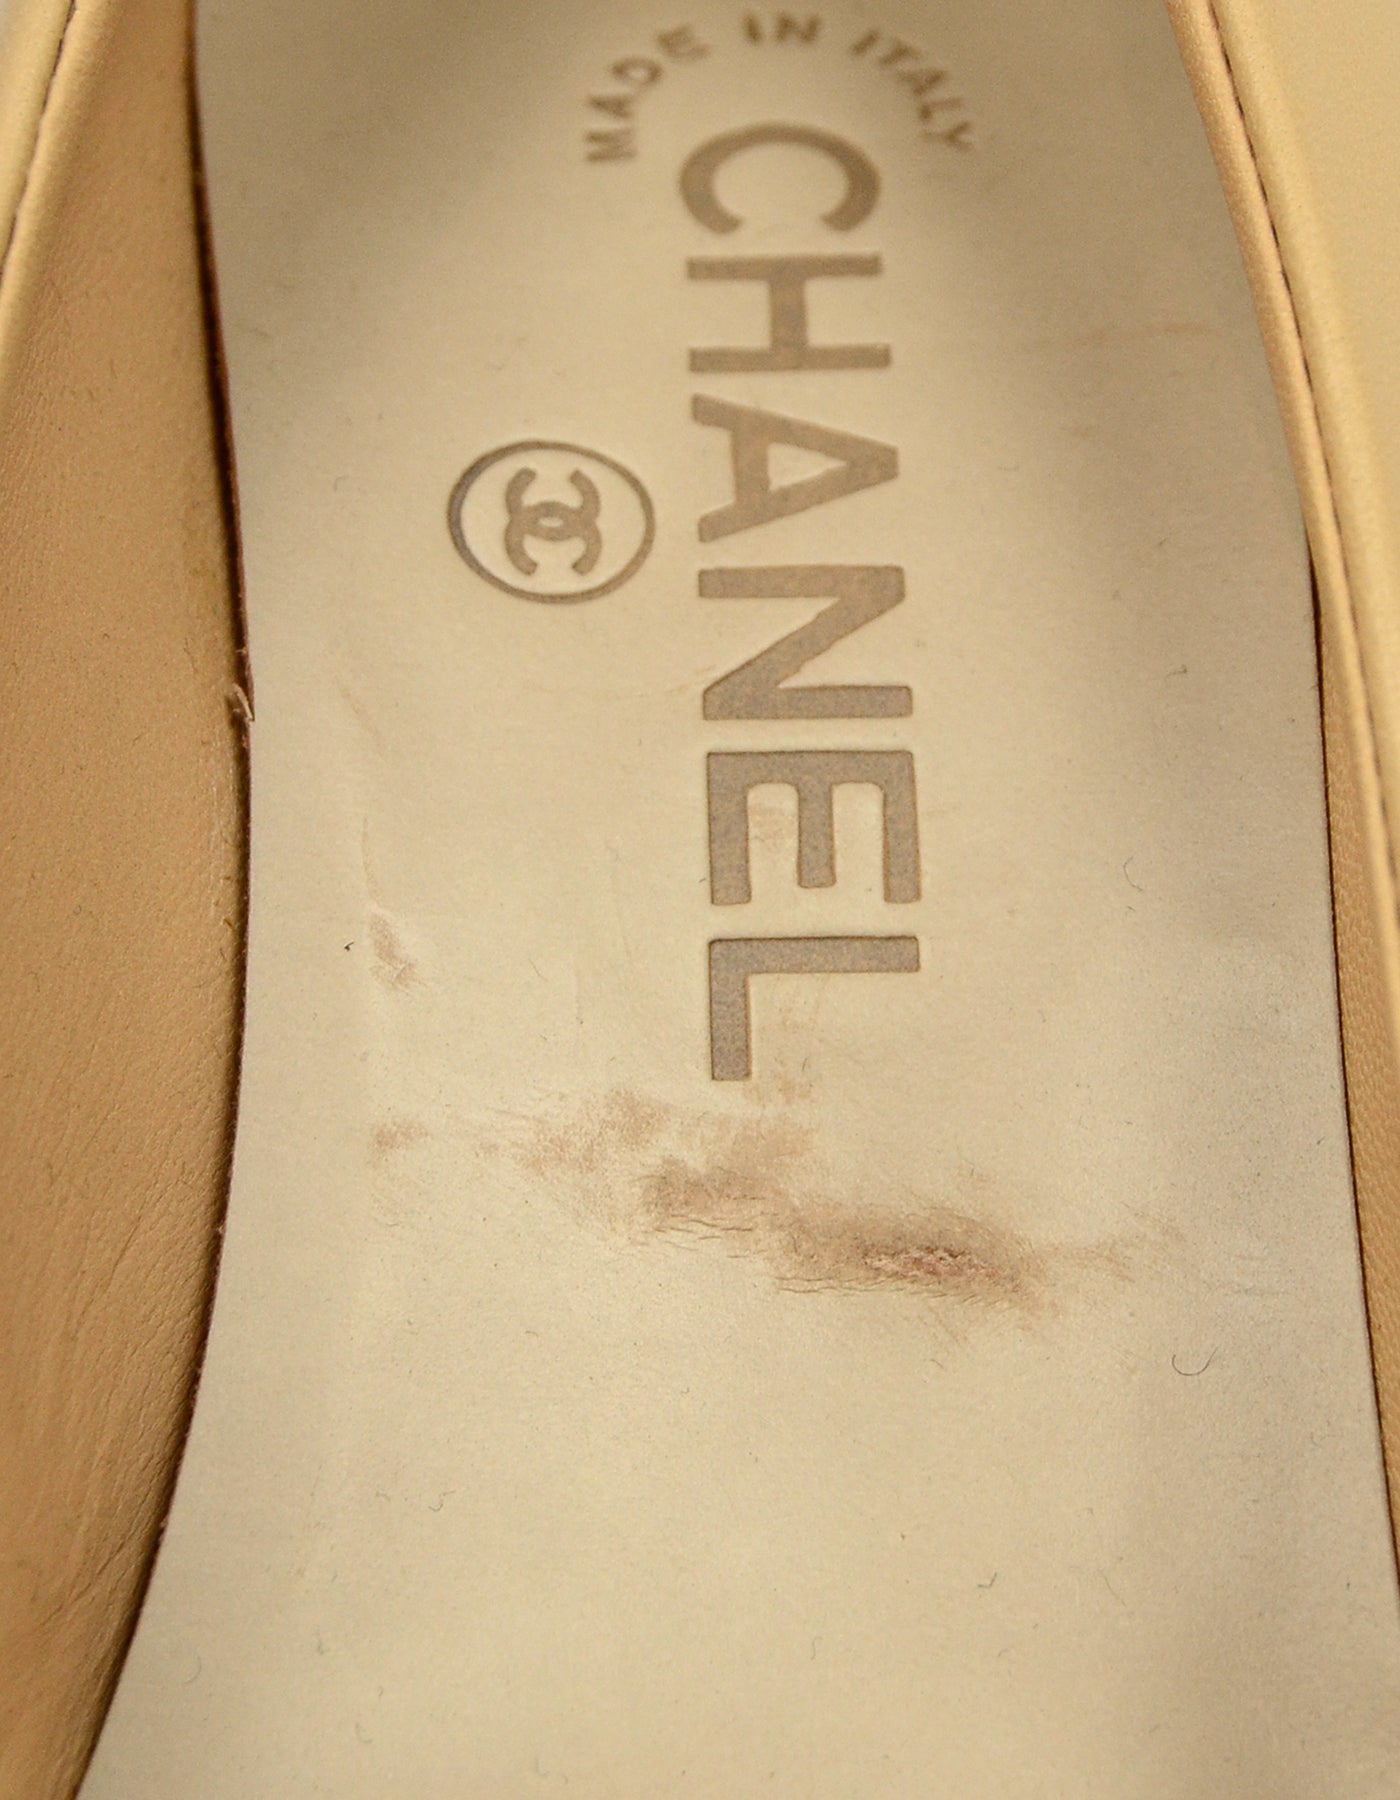 Chanel Beige/Black Leather Hidden Platform CC Heels sz 37